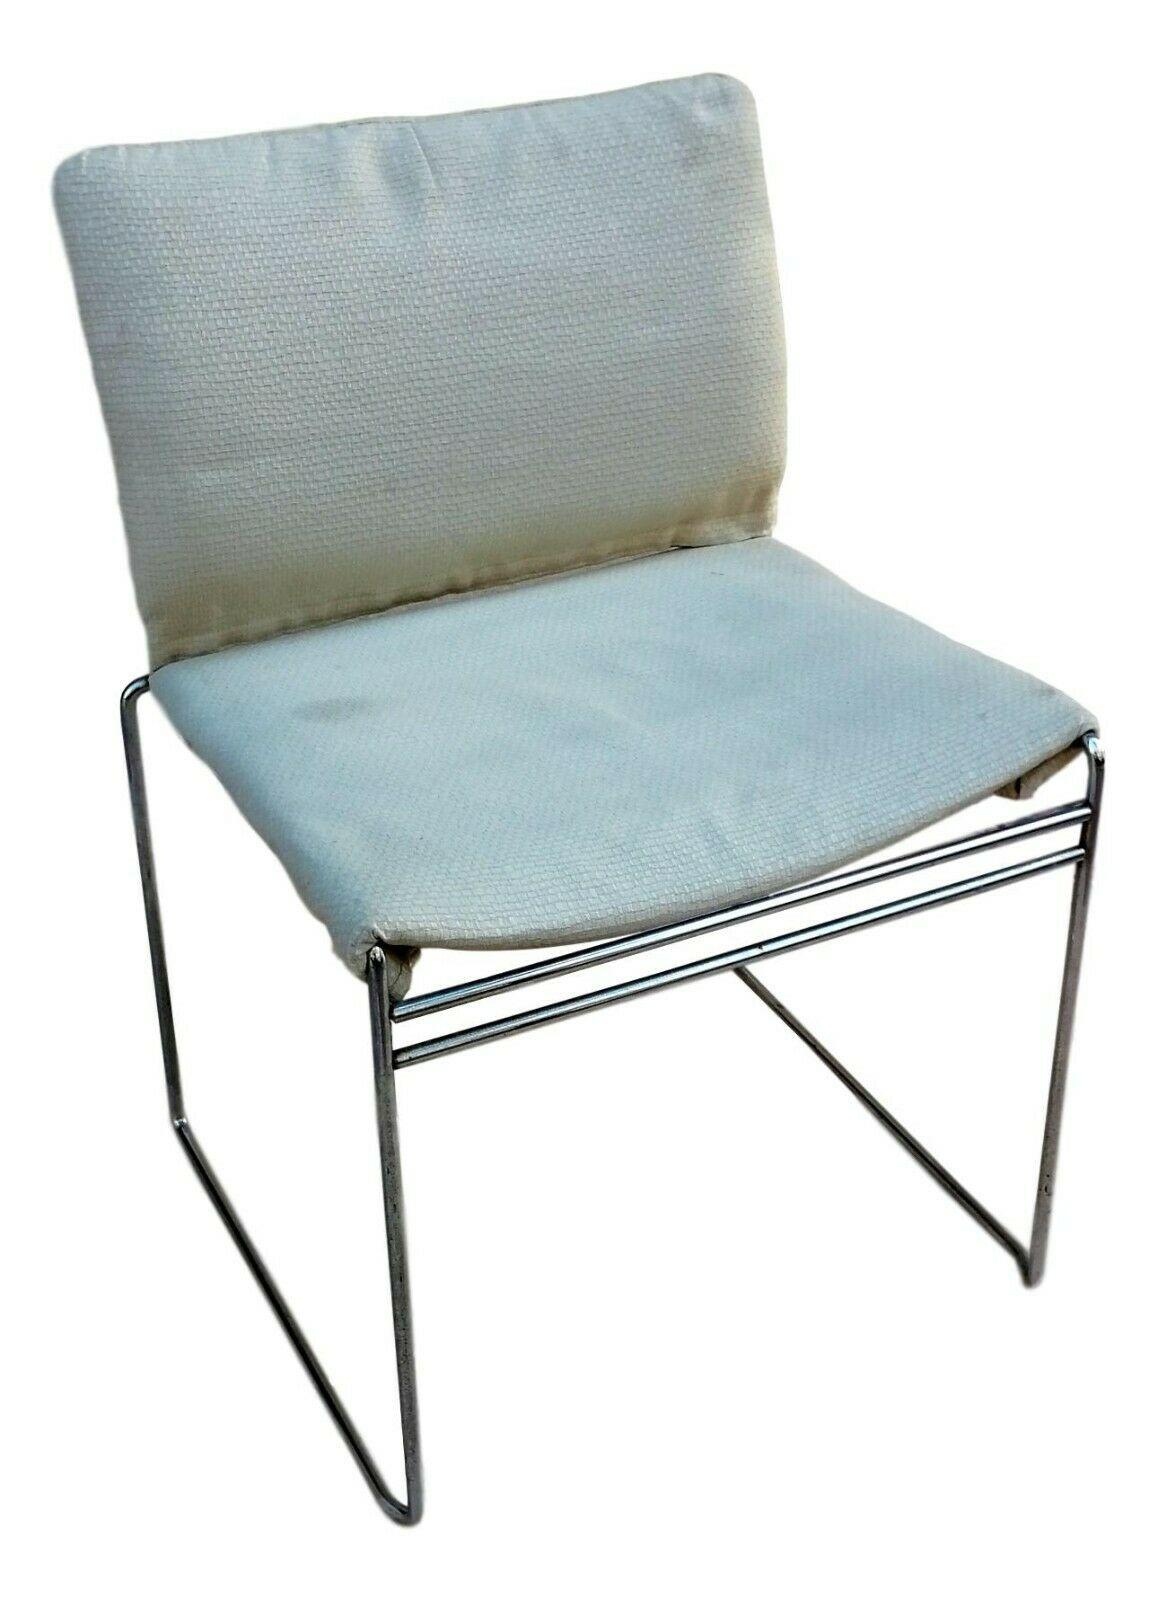 Chair model 